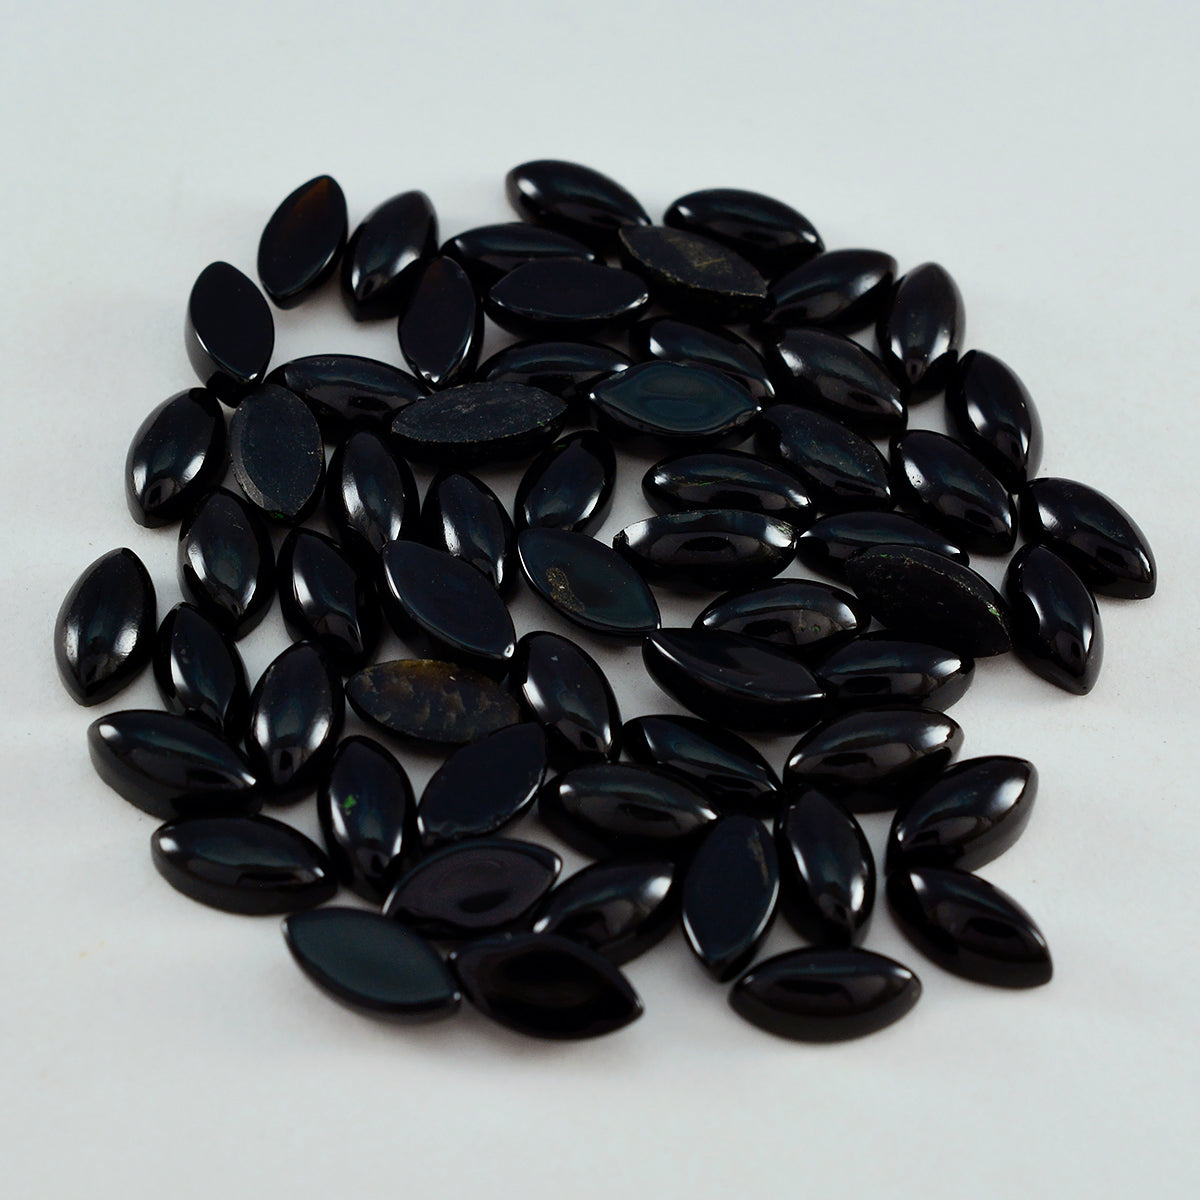 riyogems 1 st svart onyx cabochon 3x6 mm marquise form aaa kvalitet lös ädelsten